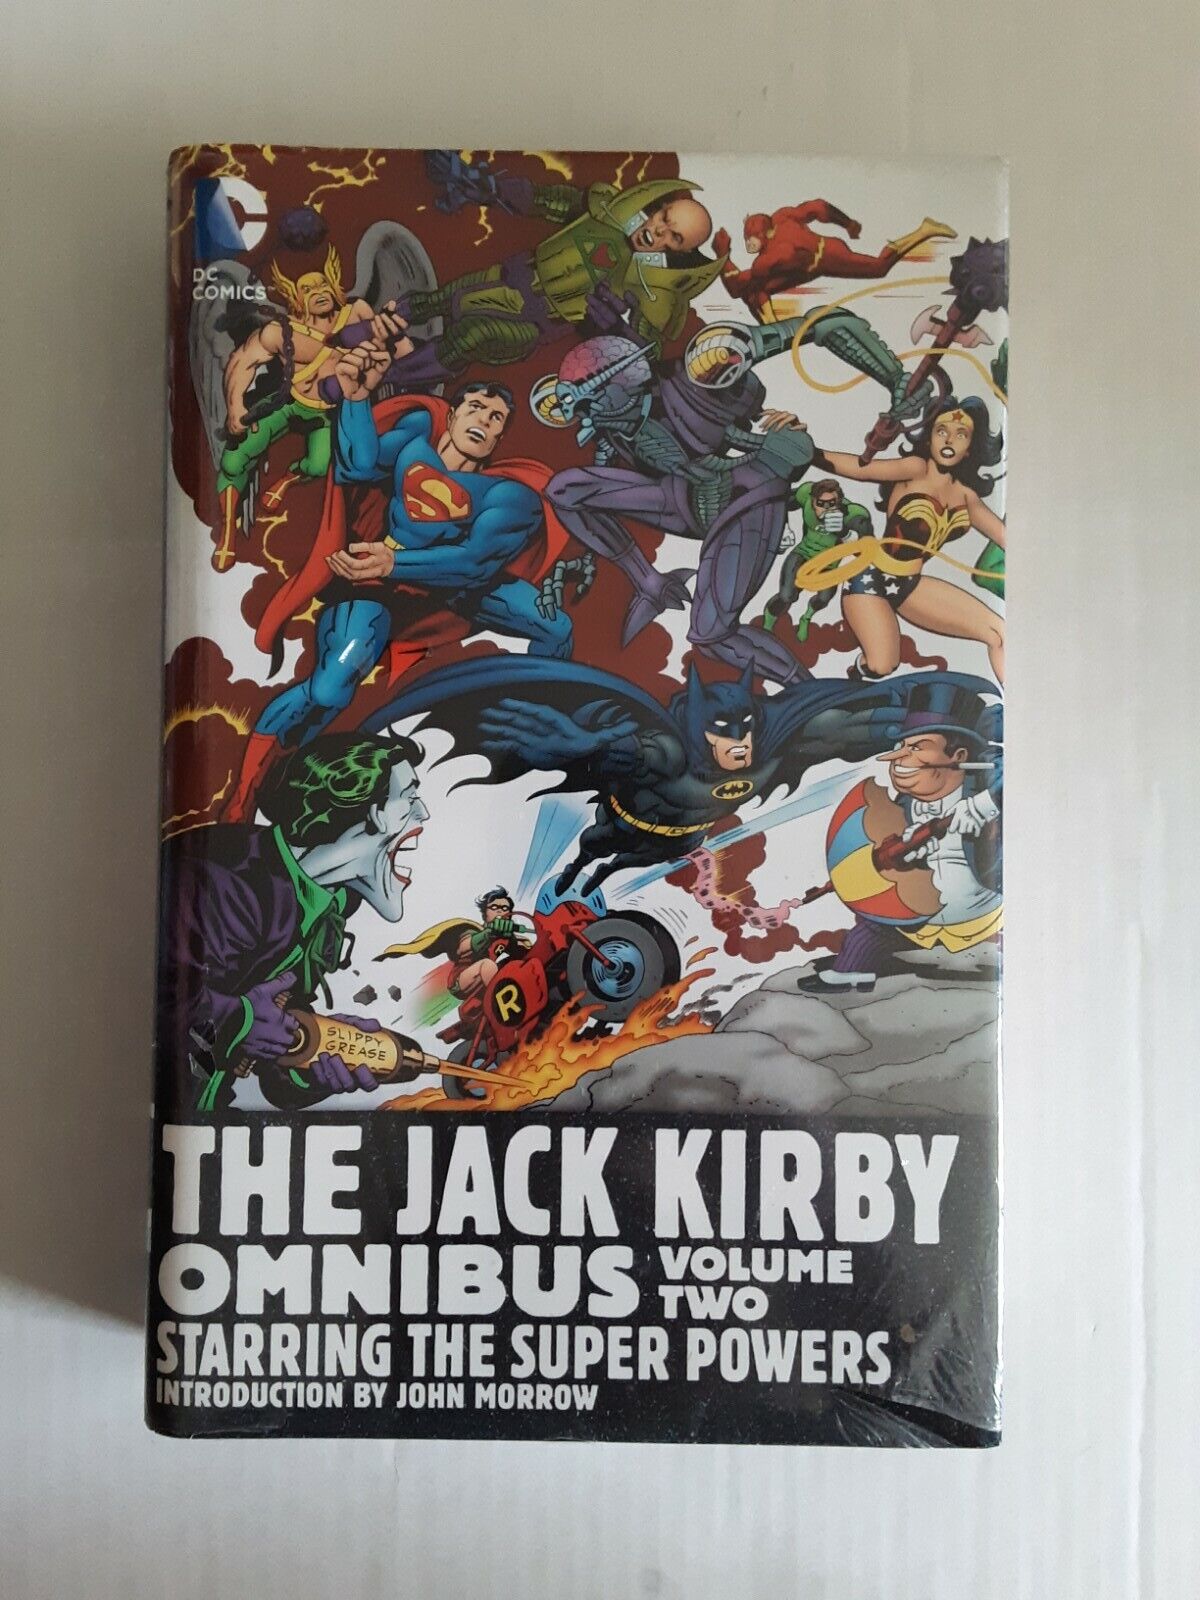 JACK KIRBY OMNIBUS Volume Two DC COMICS HARDCOVER Superman Batman super powers